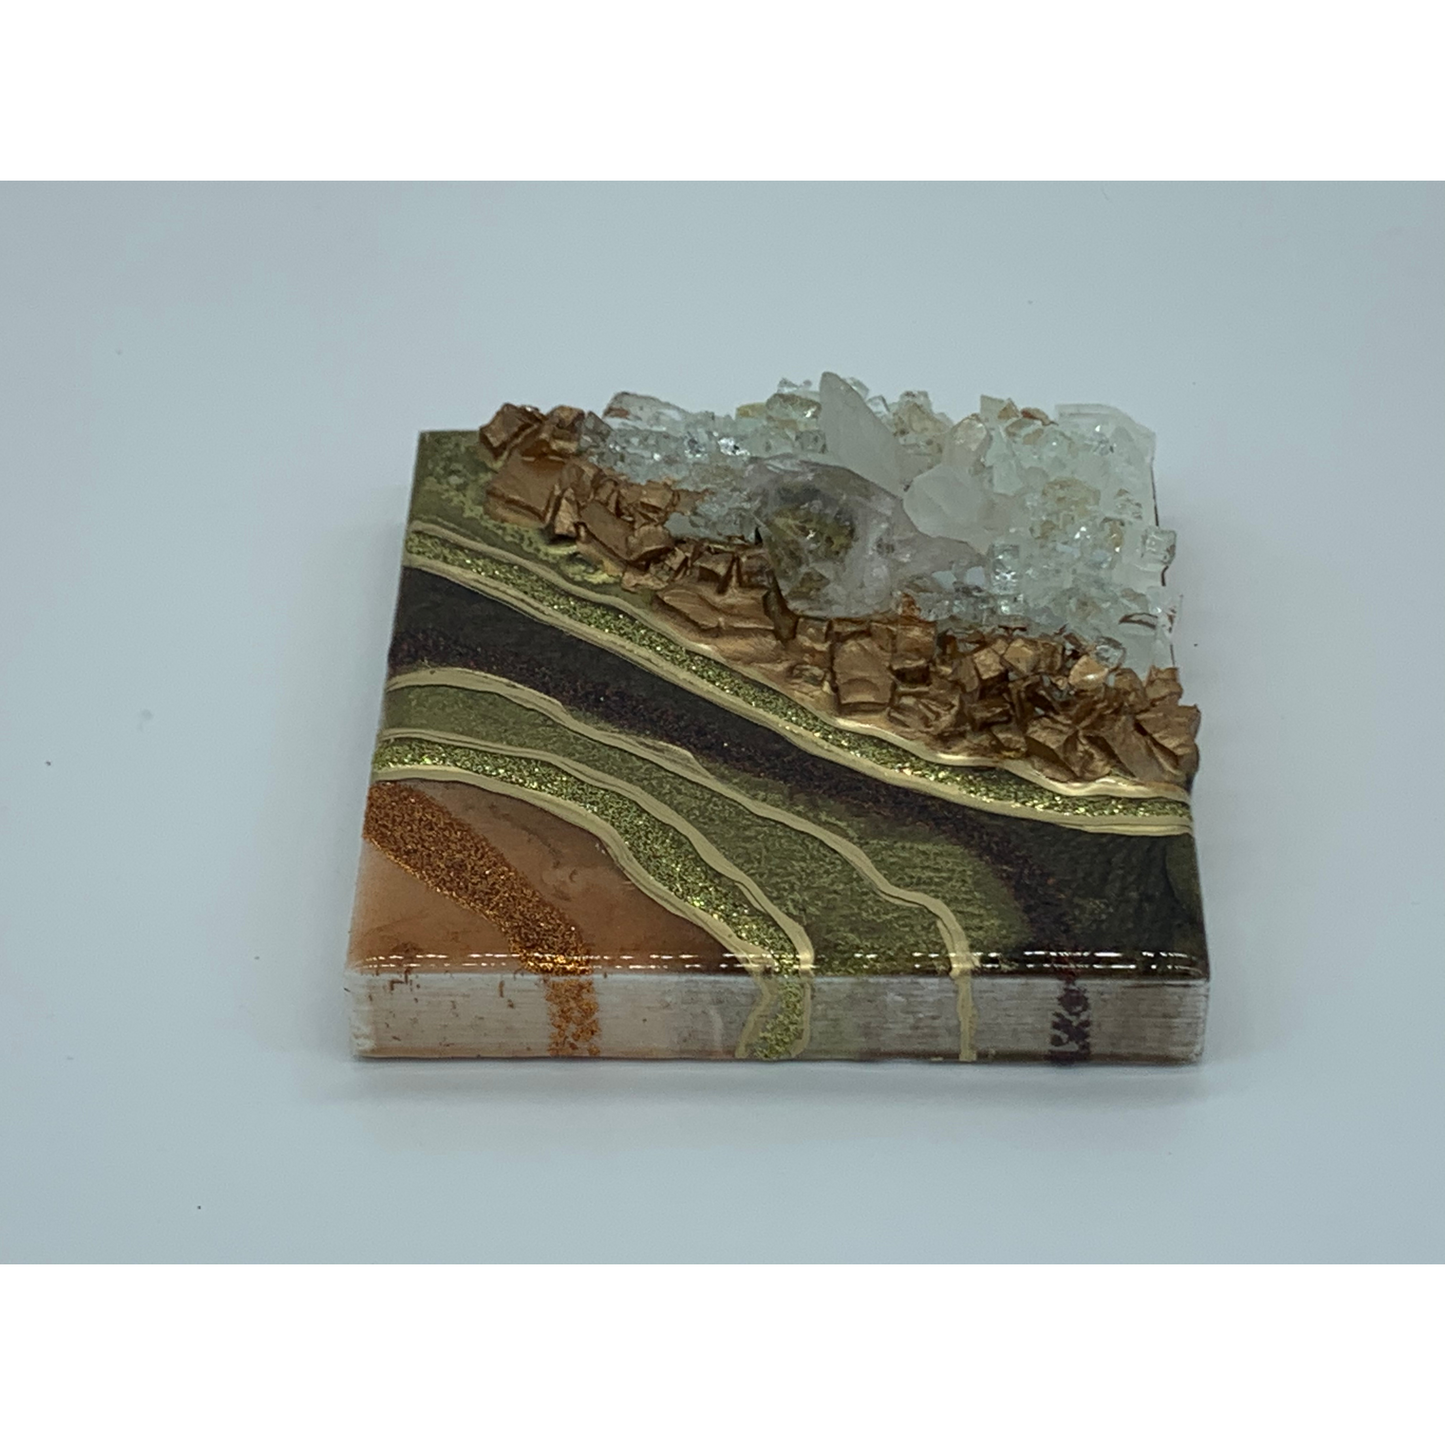 Geode Mini with Real Crystal Quartz & Beautiful Dark Colors